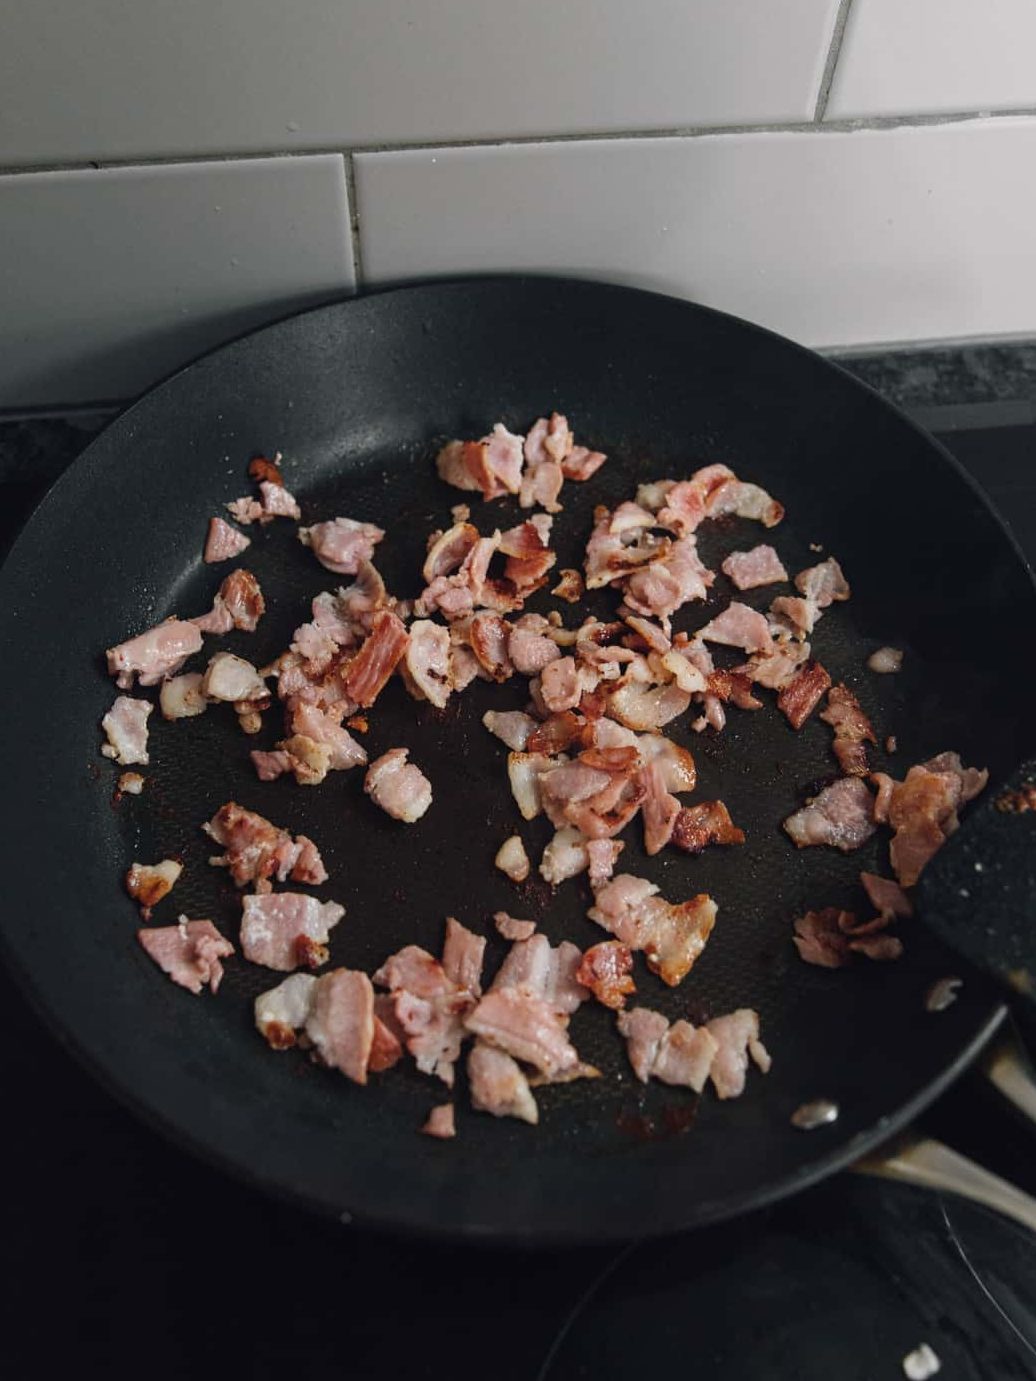  Cook bacon until crispy and set aside.